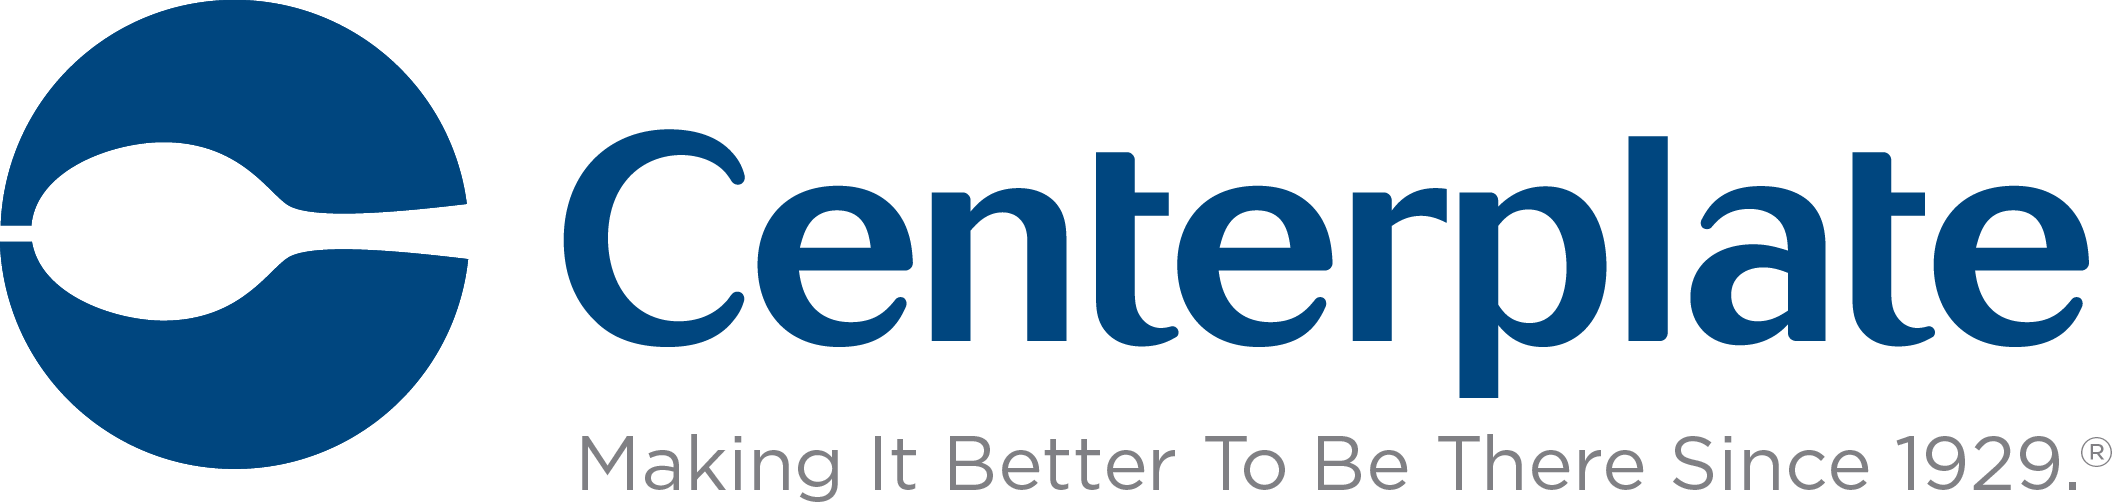 Graphic: Centerplate logo